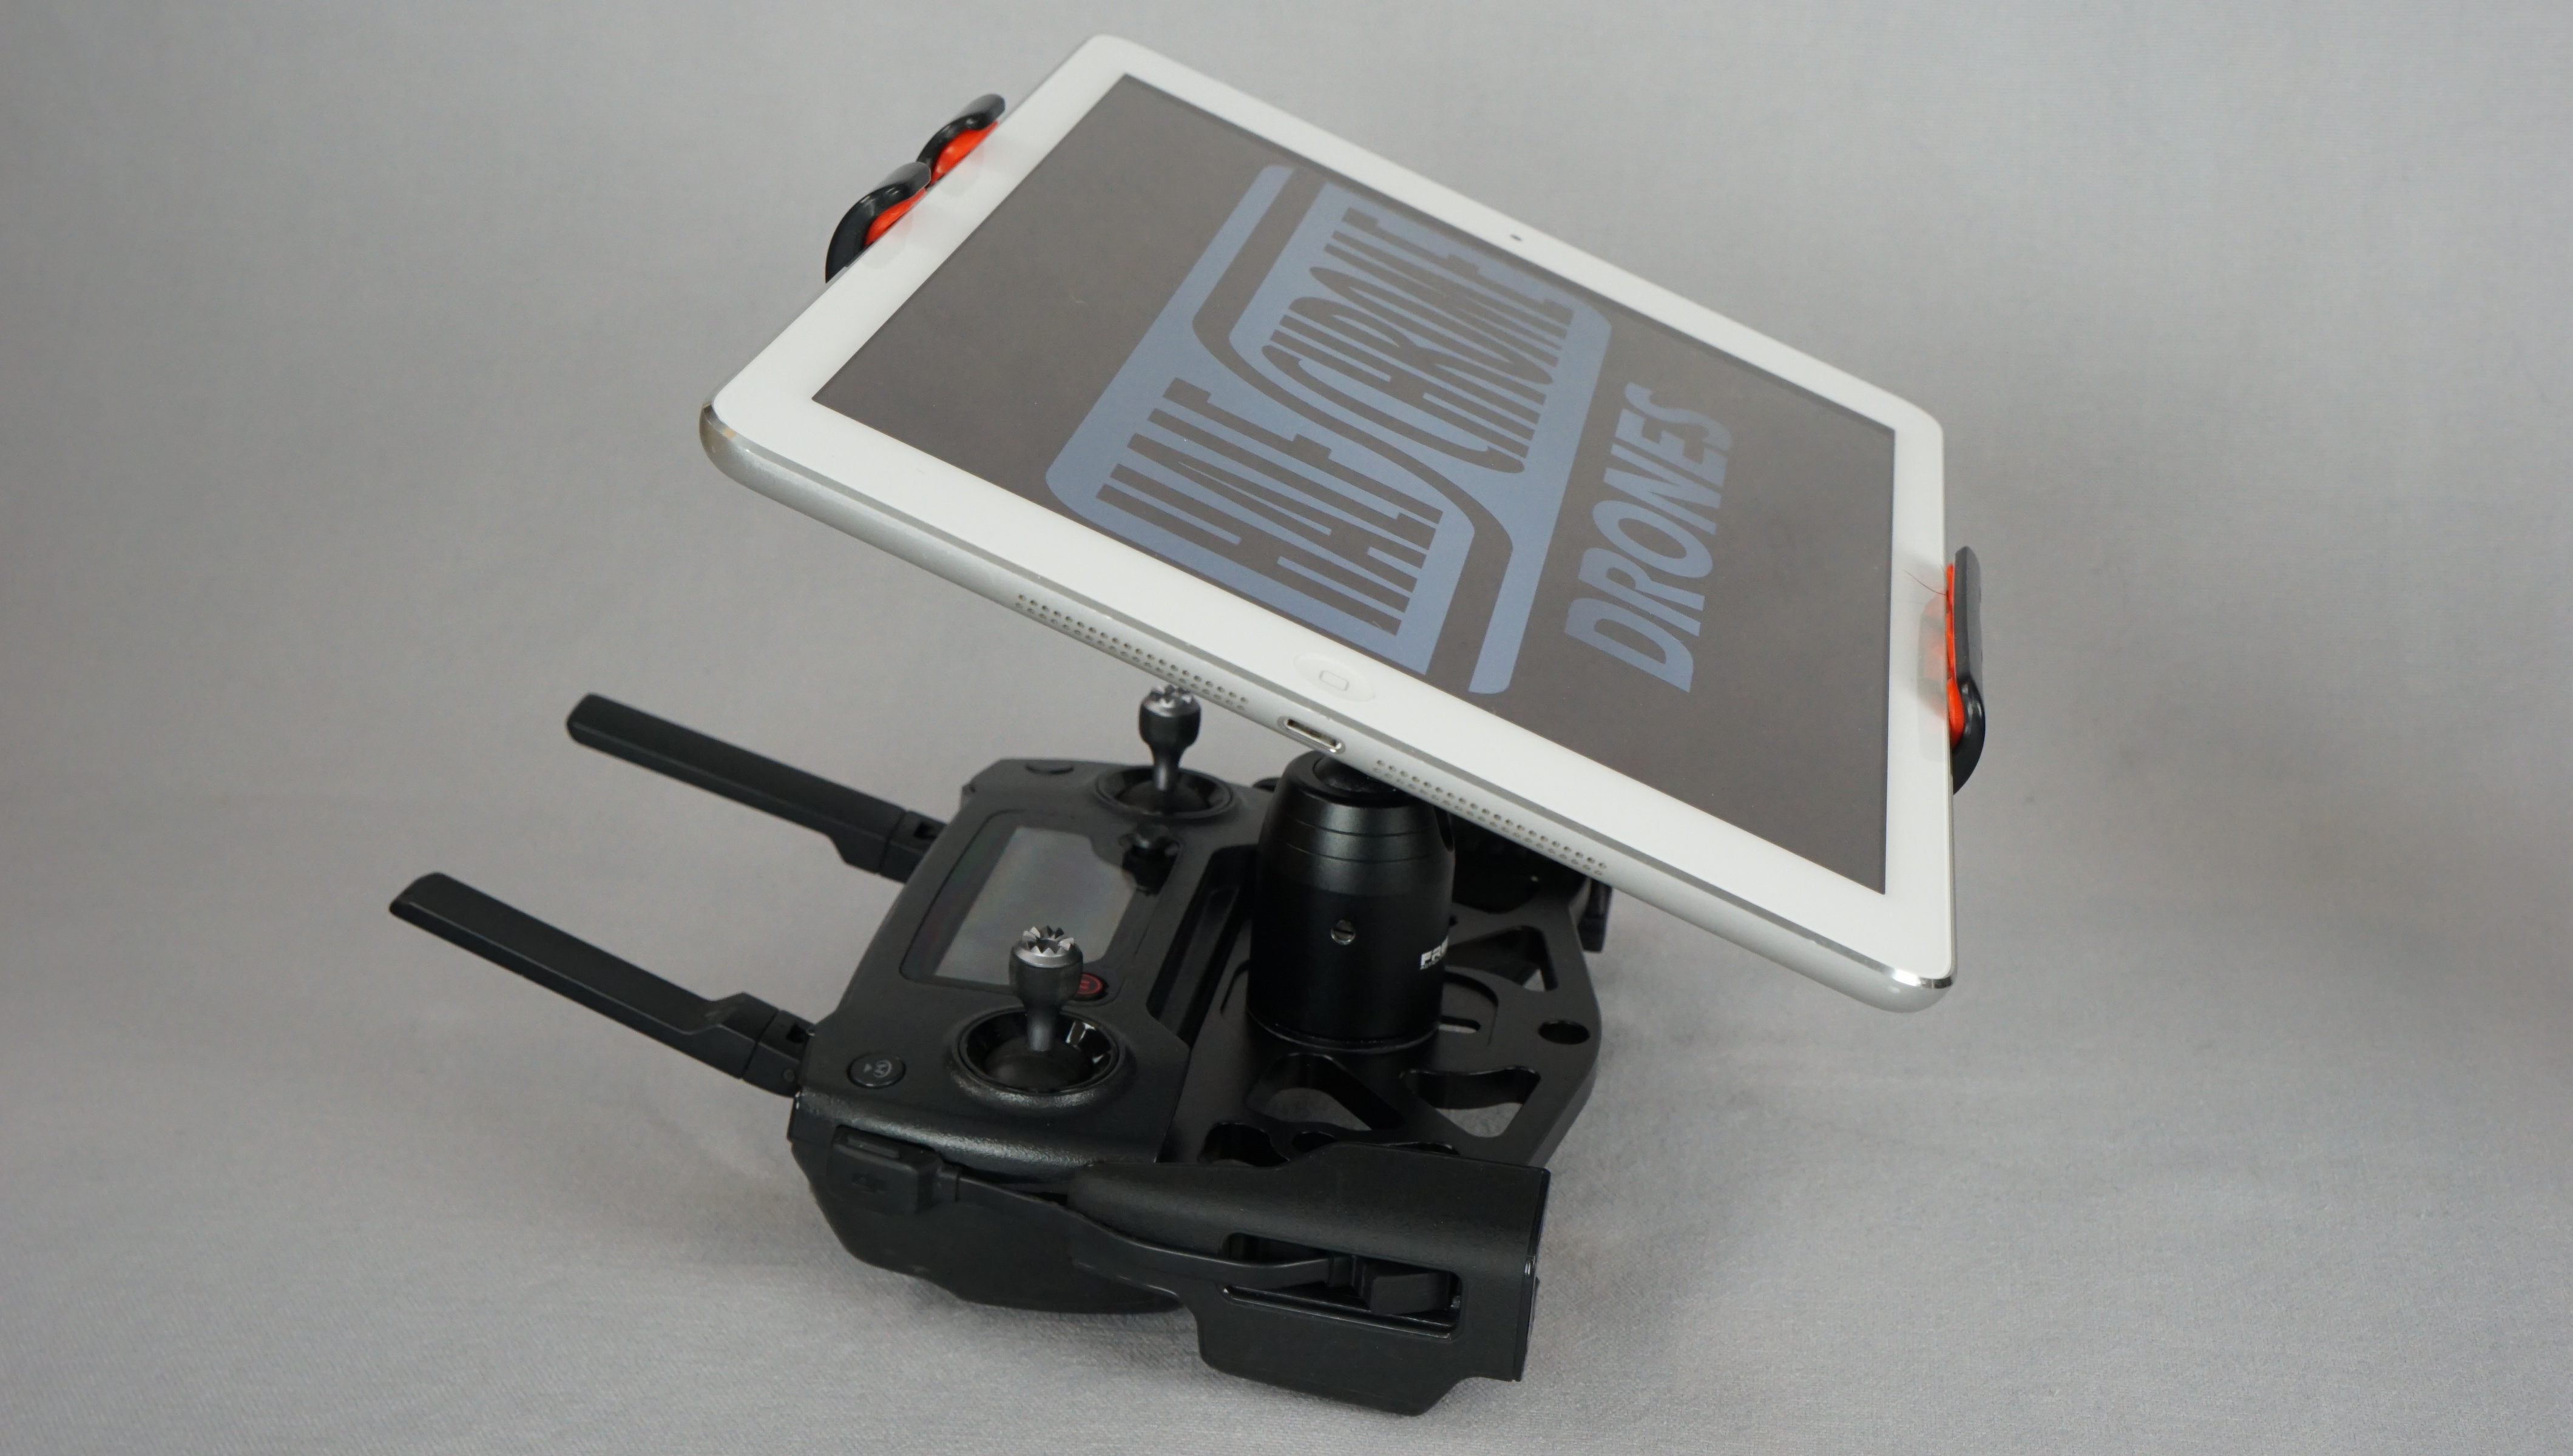 Mavic Air tablet mount